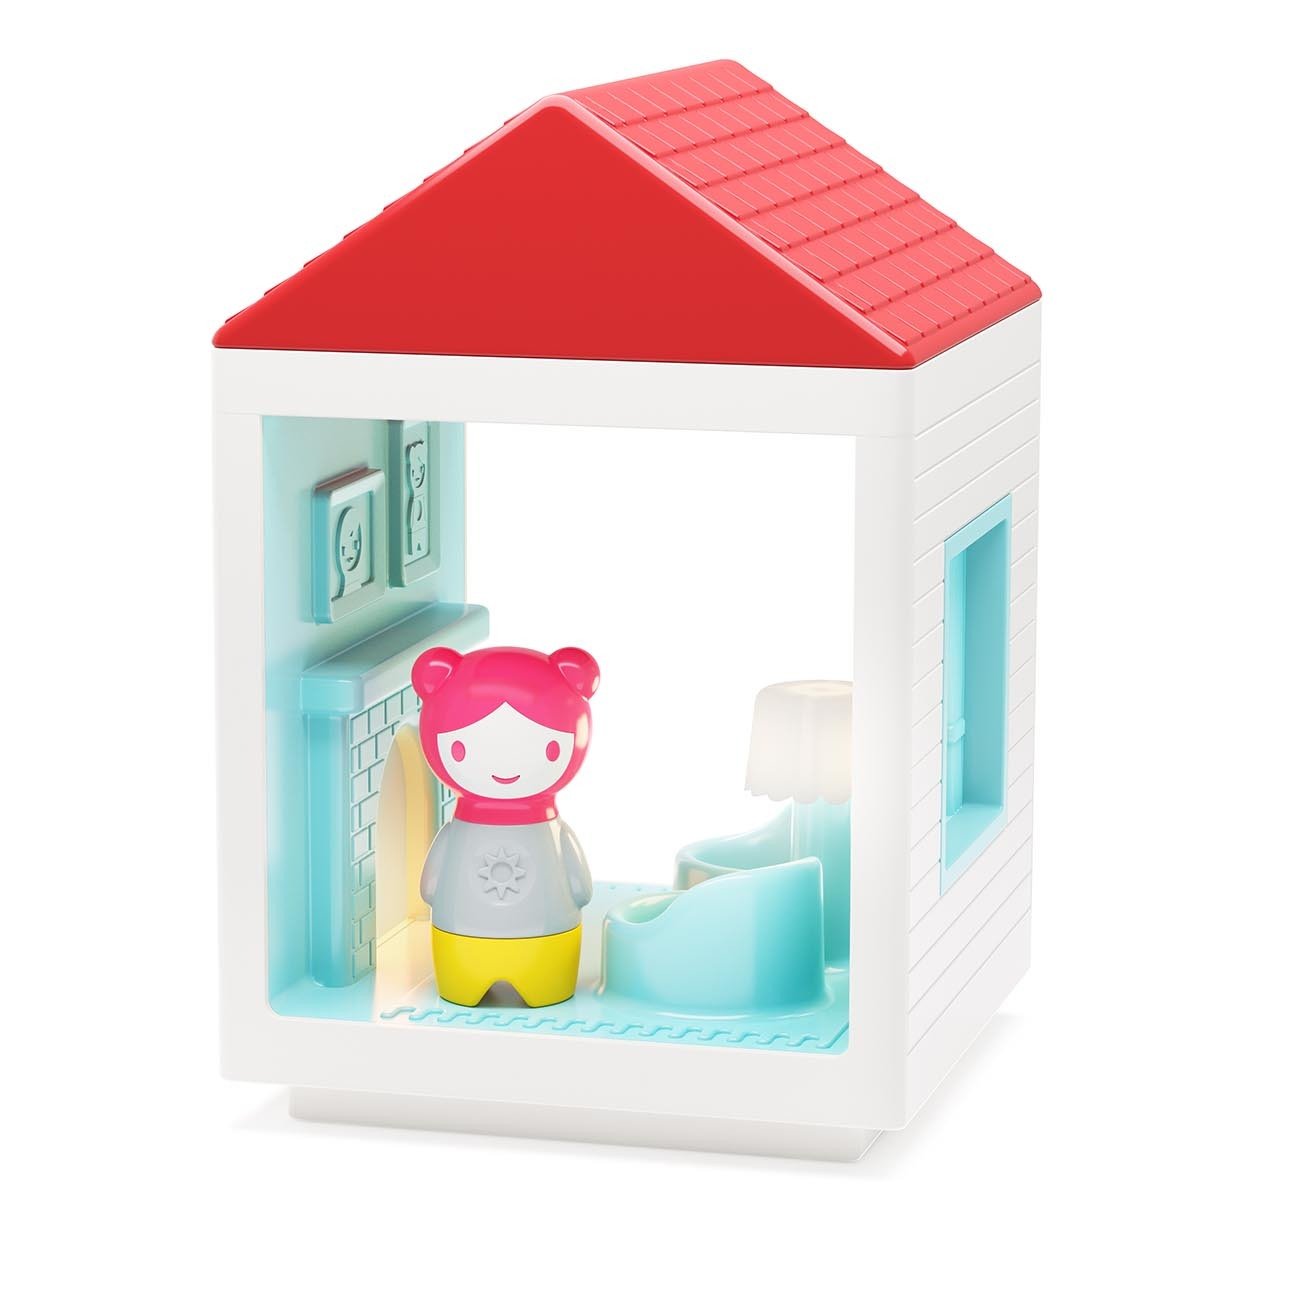 Myland Modular Dollhouse-Toys-Kid O-Tiny Paper Co-Afterpay-Australia-Toy-Store